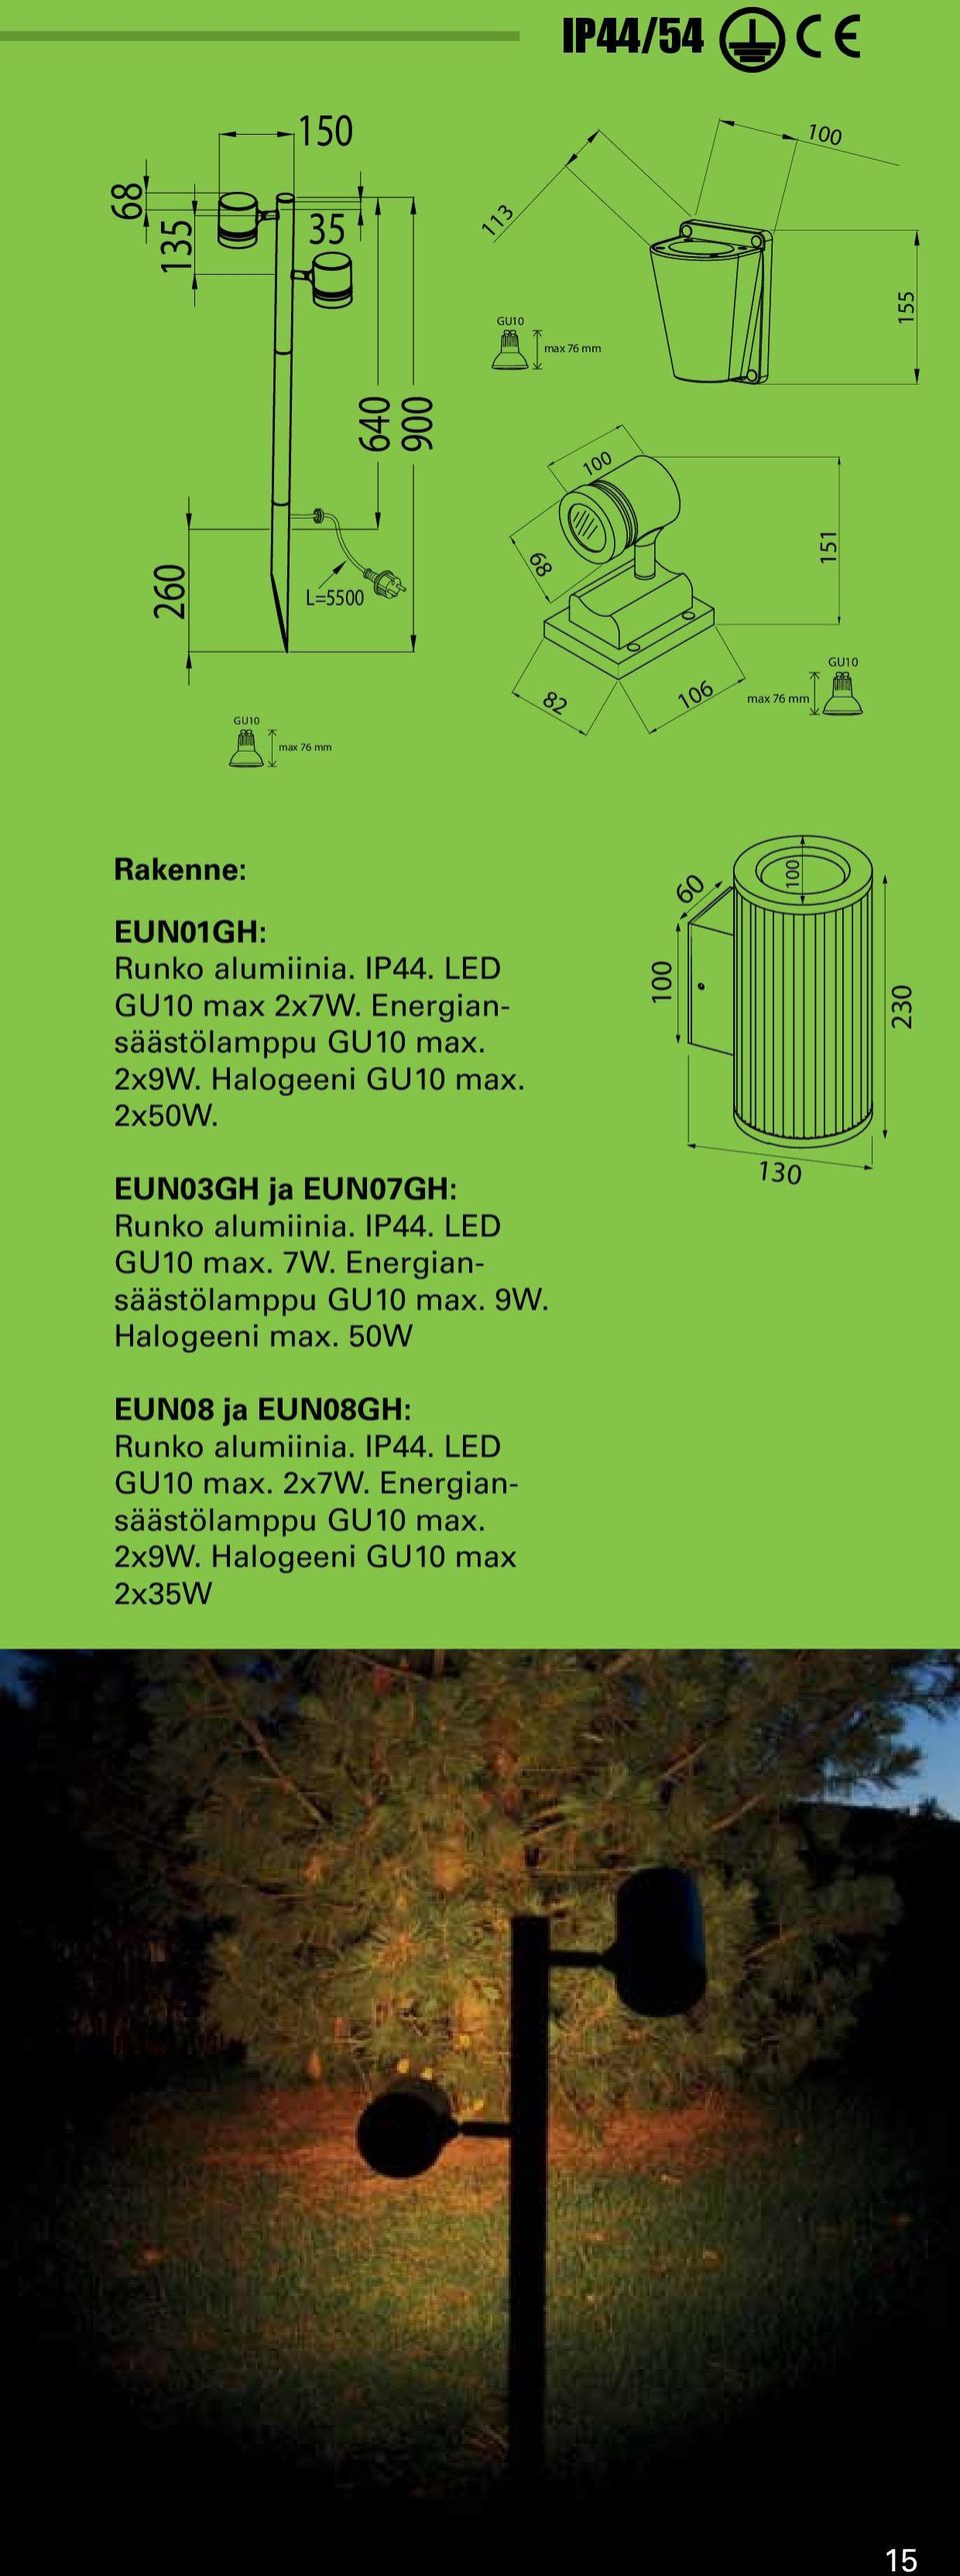 Halogeeni GU10 max. 2x50W. 100 230 EUN03GH ja EUN07GH: Runko alumiinia. IP44. LED GU10 max. 7W. Energiansäästölamppu GU10 max. 9W.